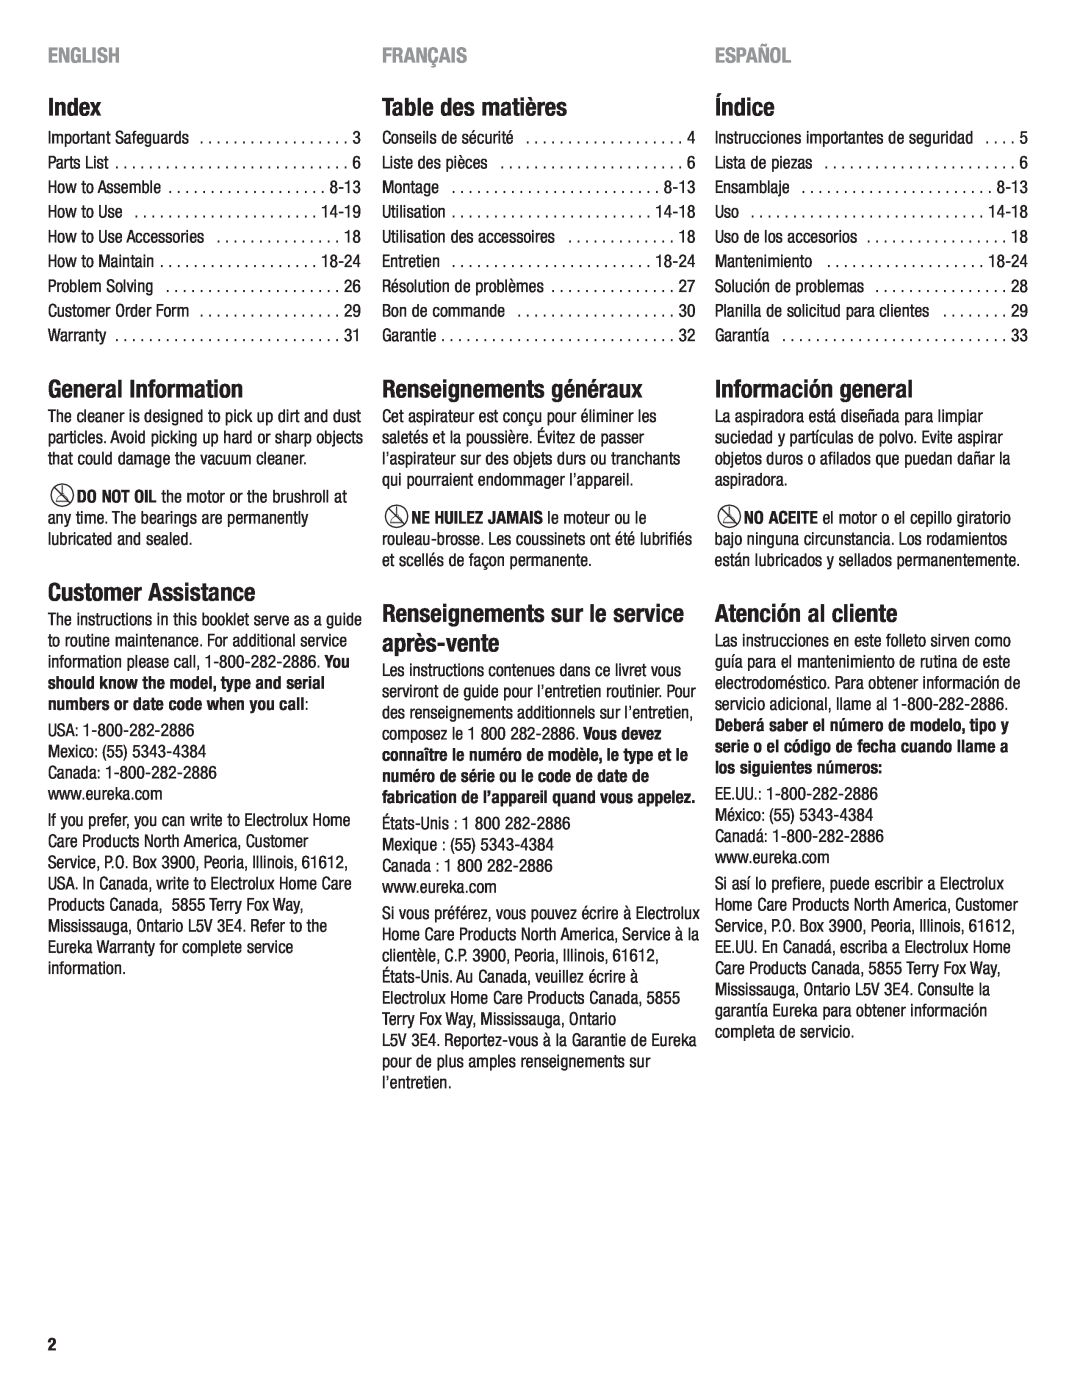 Eureka 4750 Index, Table des matières, Índice, General Information, Renseignements généraux, Información general, English 